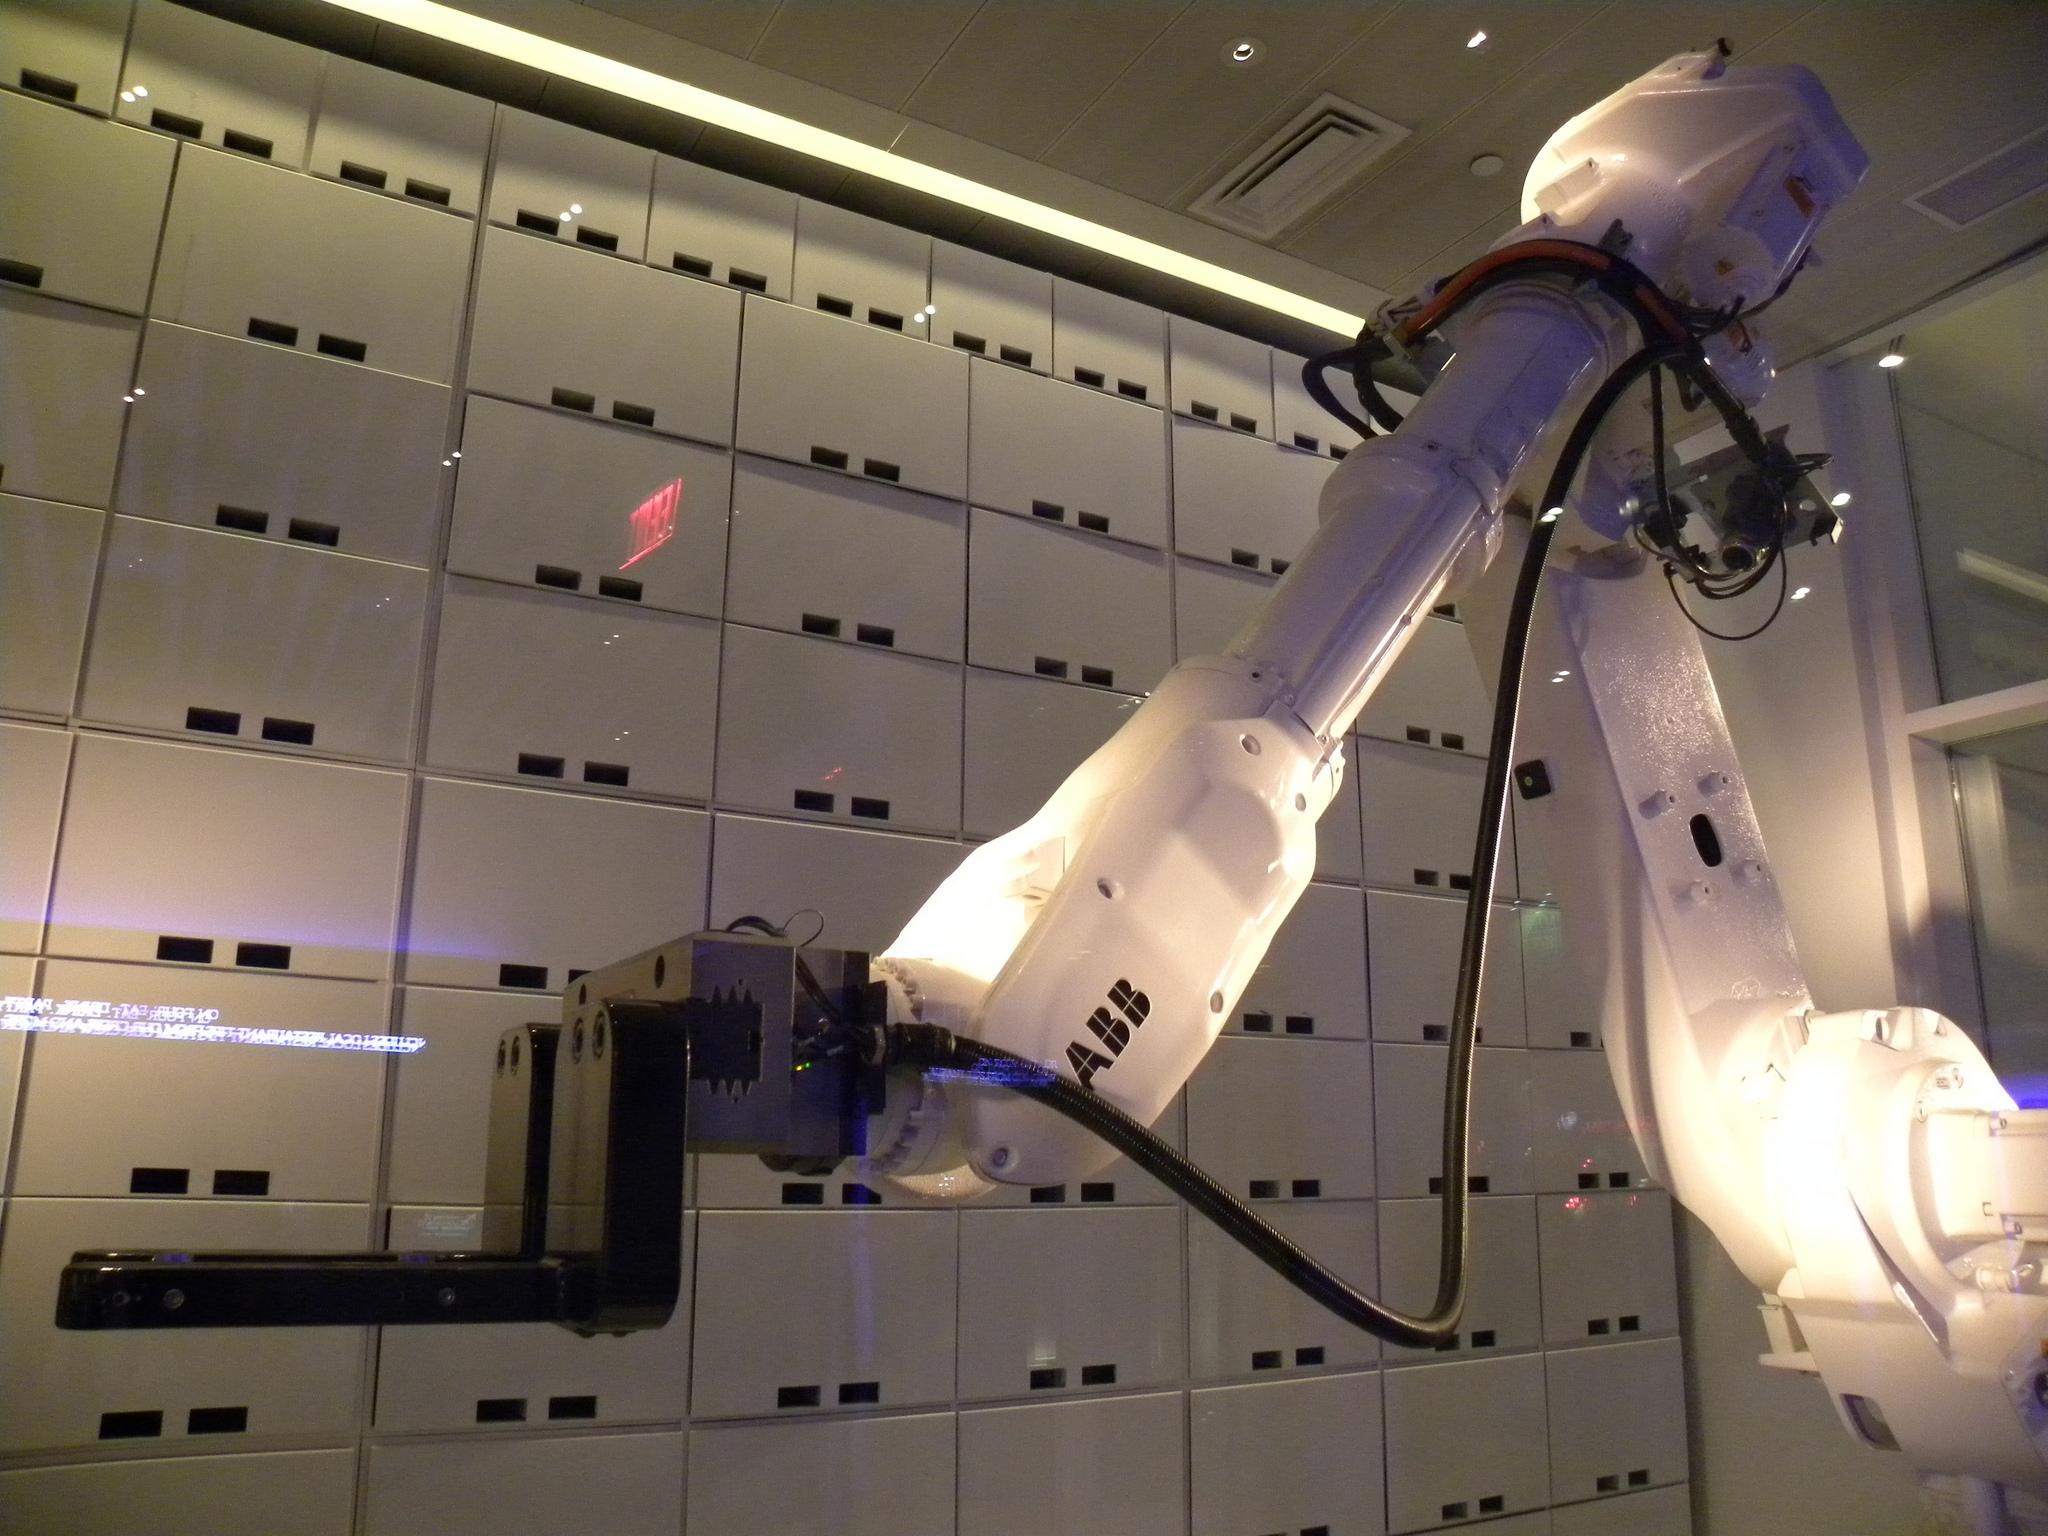 A "Yobot" handles luggage at New York's Yotel hotel